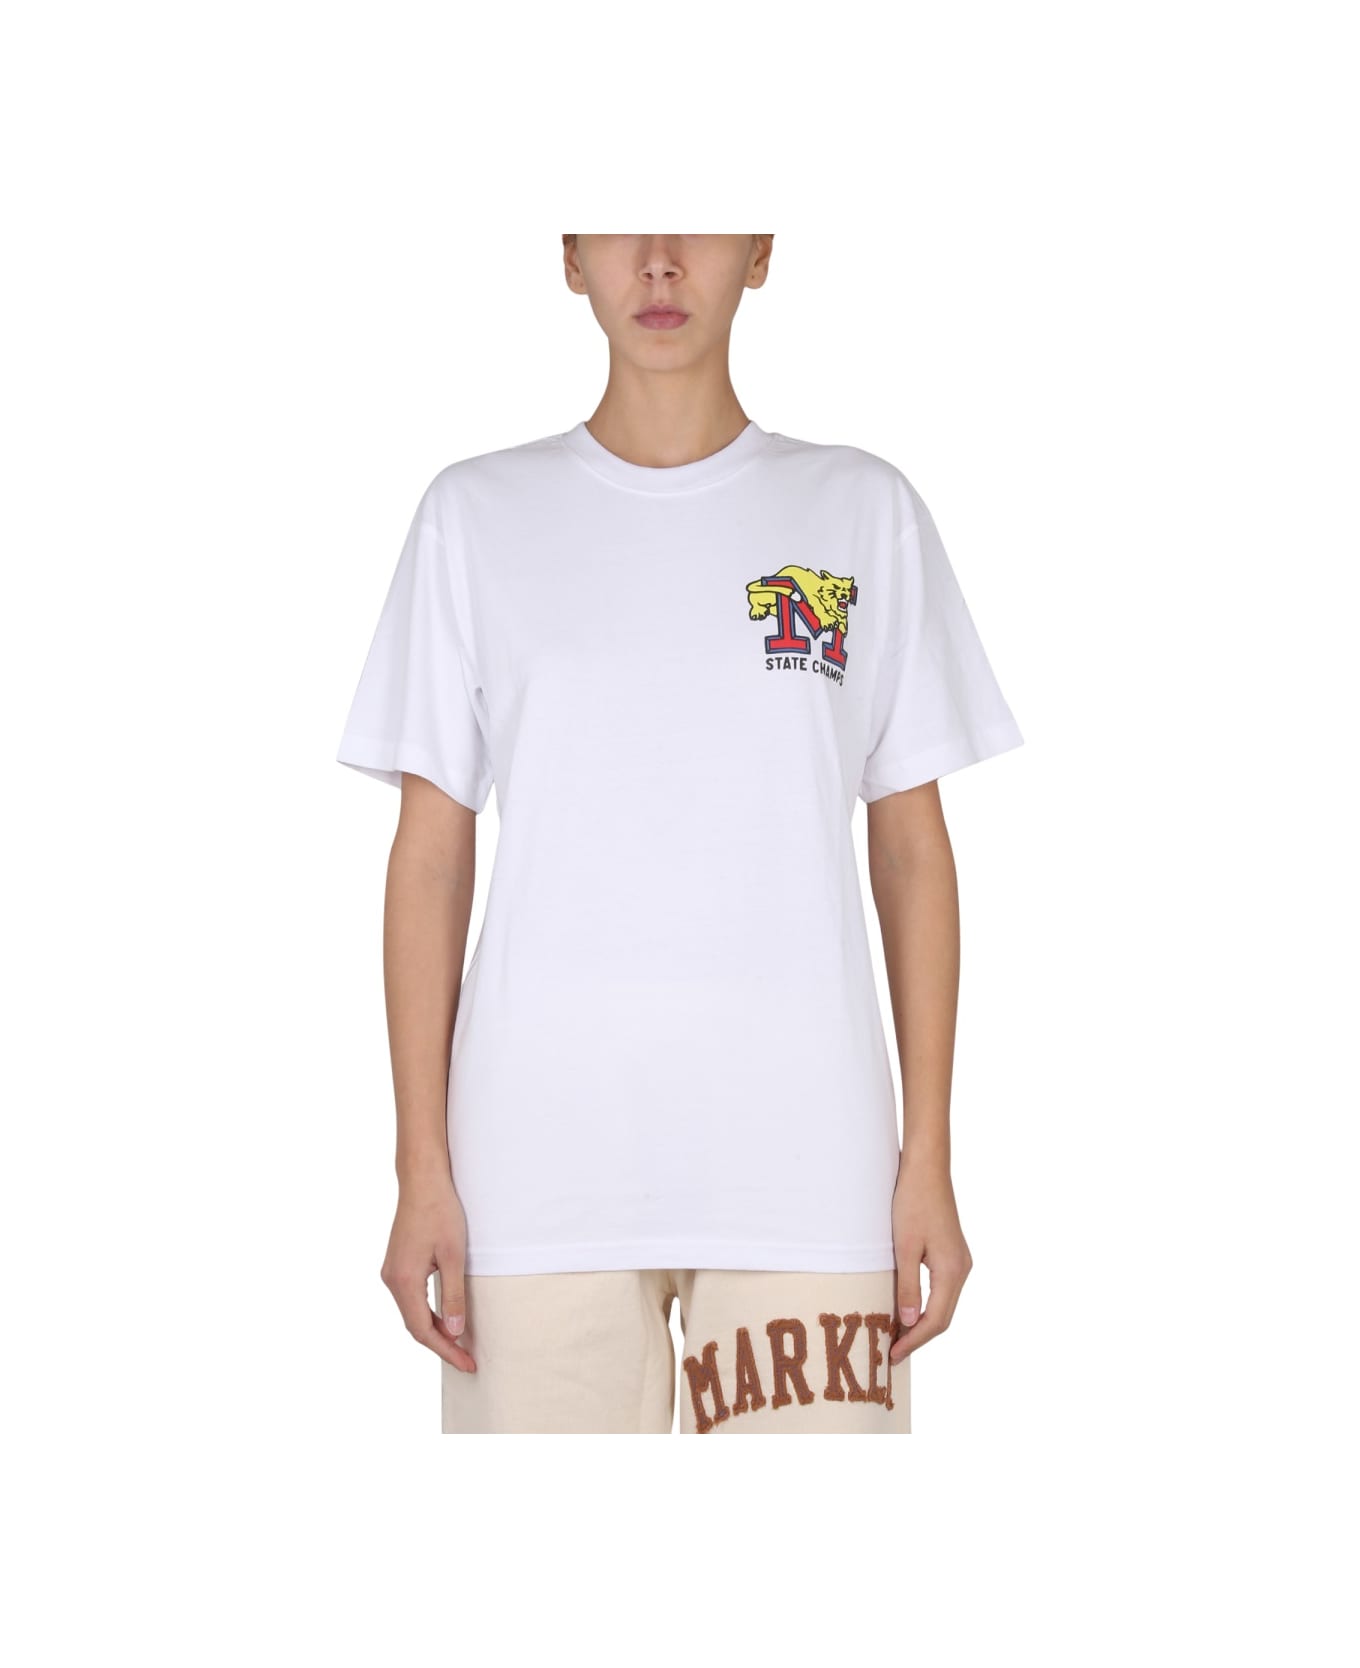 Market T-shirt State Champs - WHITE Tシャツ